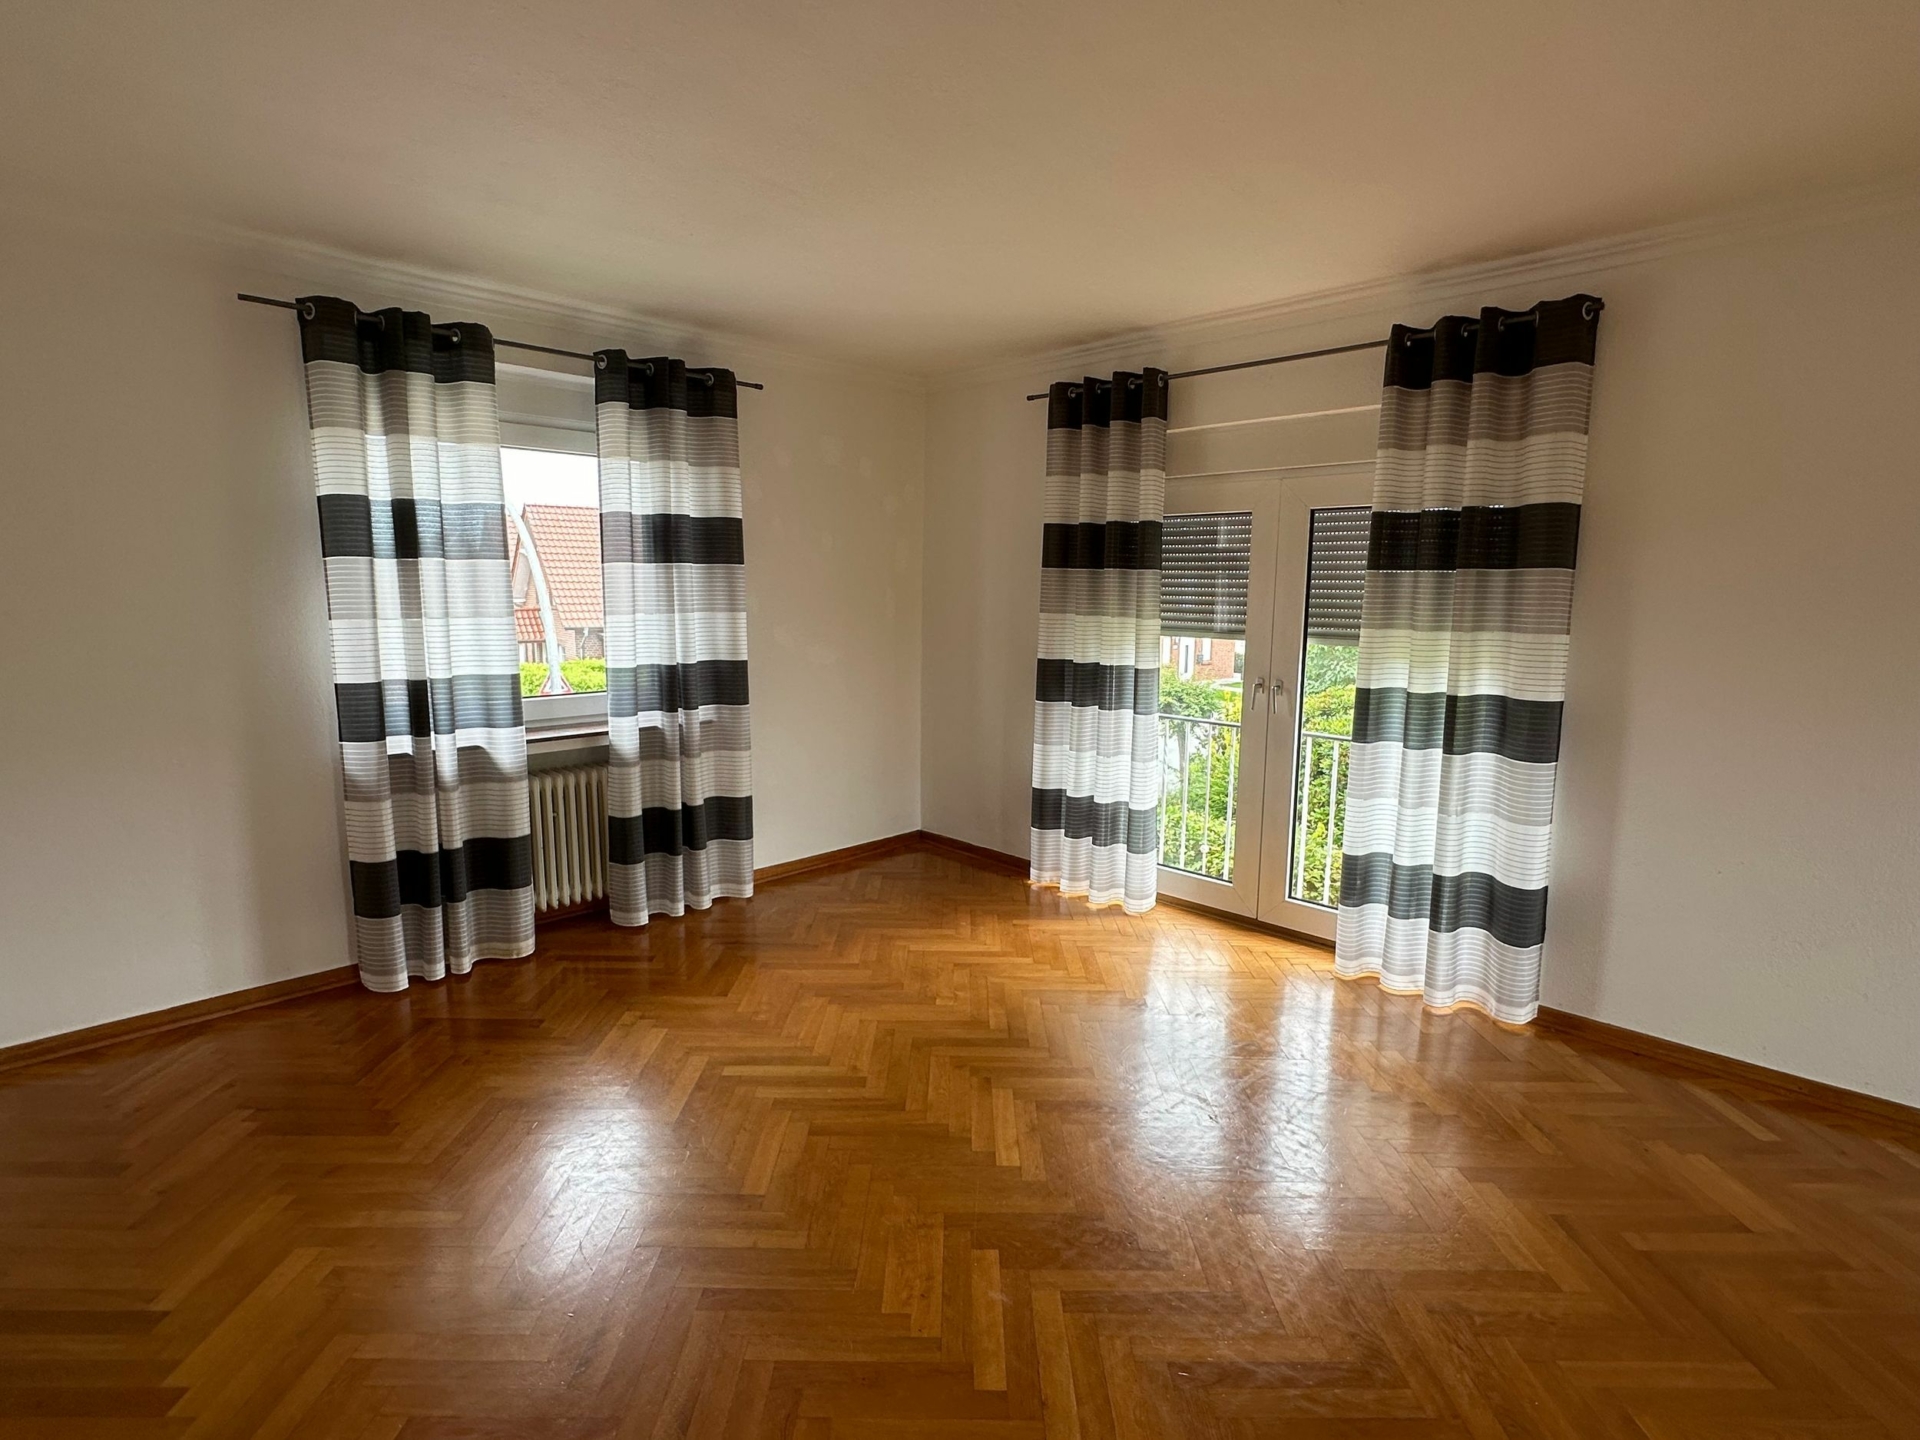 Großzügige 4-Zimmer Wohnung mit Balkon in Bersenbrück! 49593 Bersenbrück, Wohnung